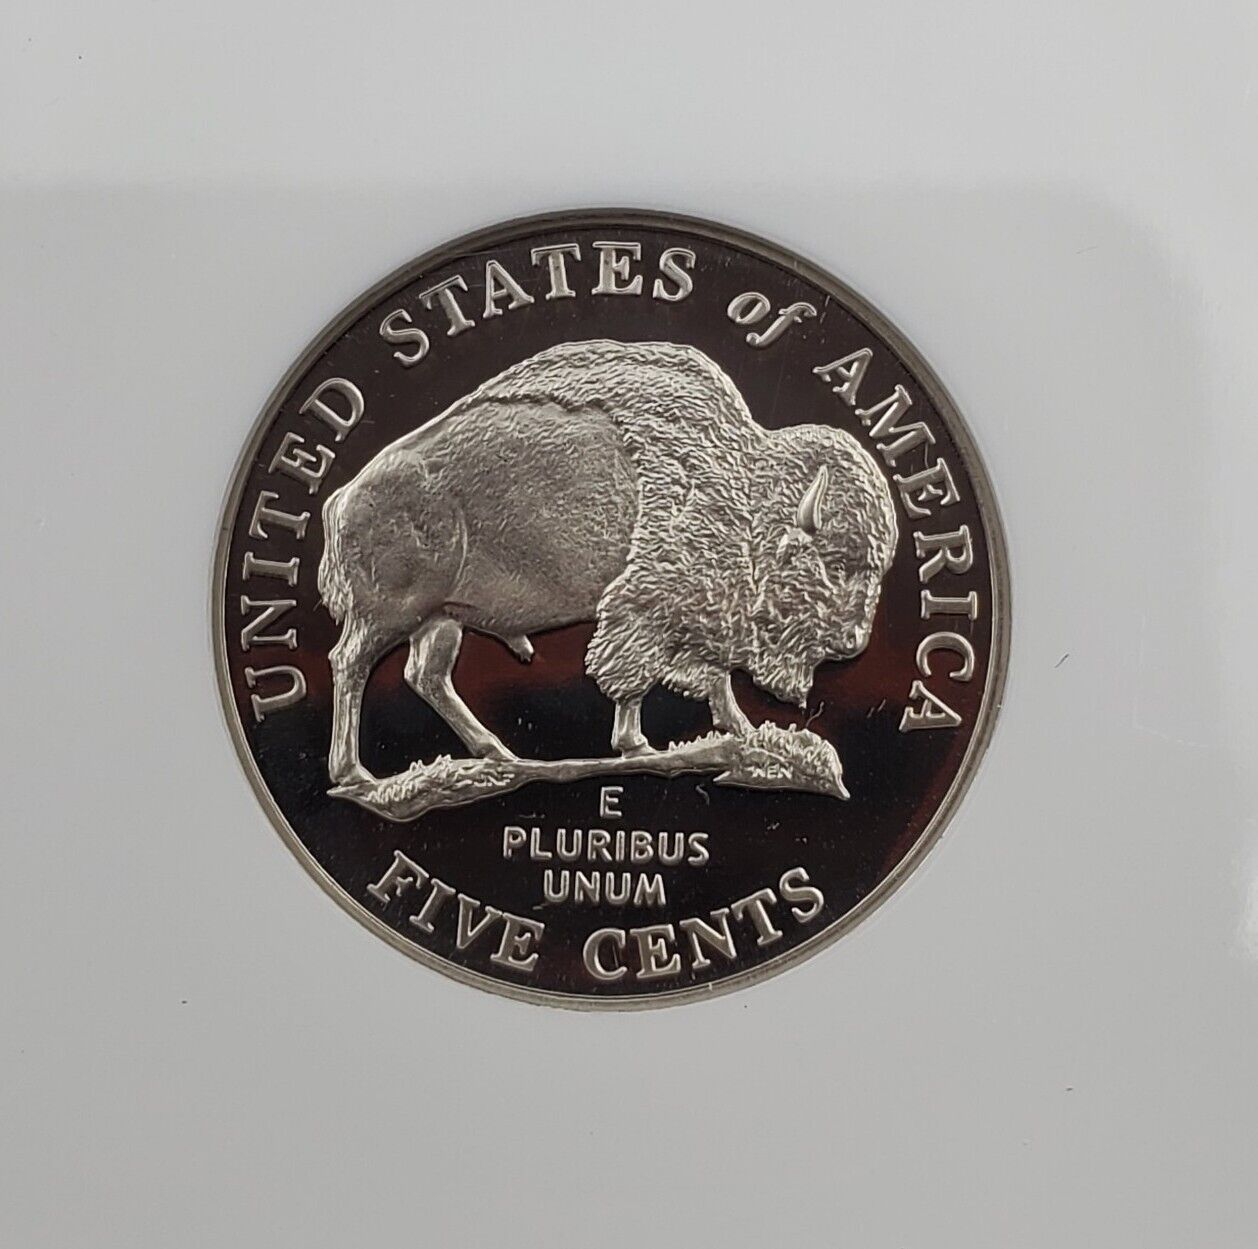 2005 S Bison Buffalo 5c Nickel Commemorative NGC PF69 Ultra Cameo #137